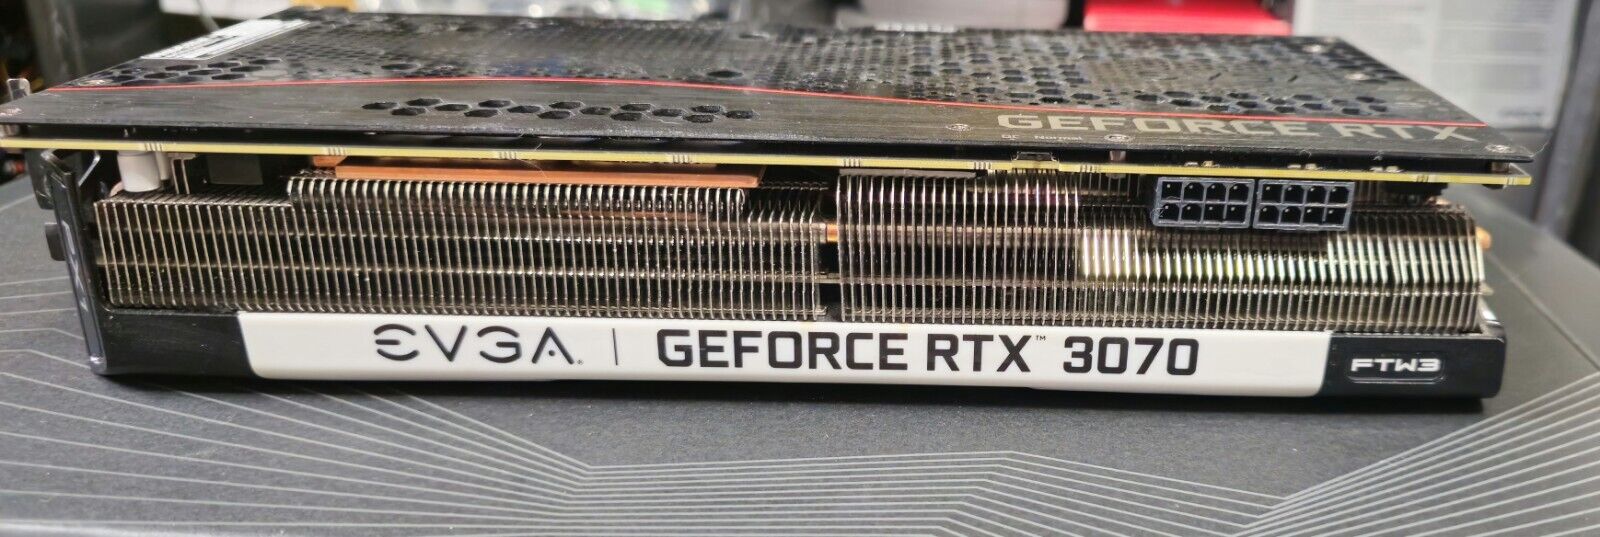 EVGA GeForce RTX 3070 FTW3 ULTRA 8GB GDDR6 Graphics Card